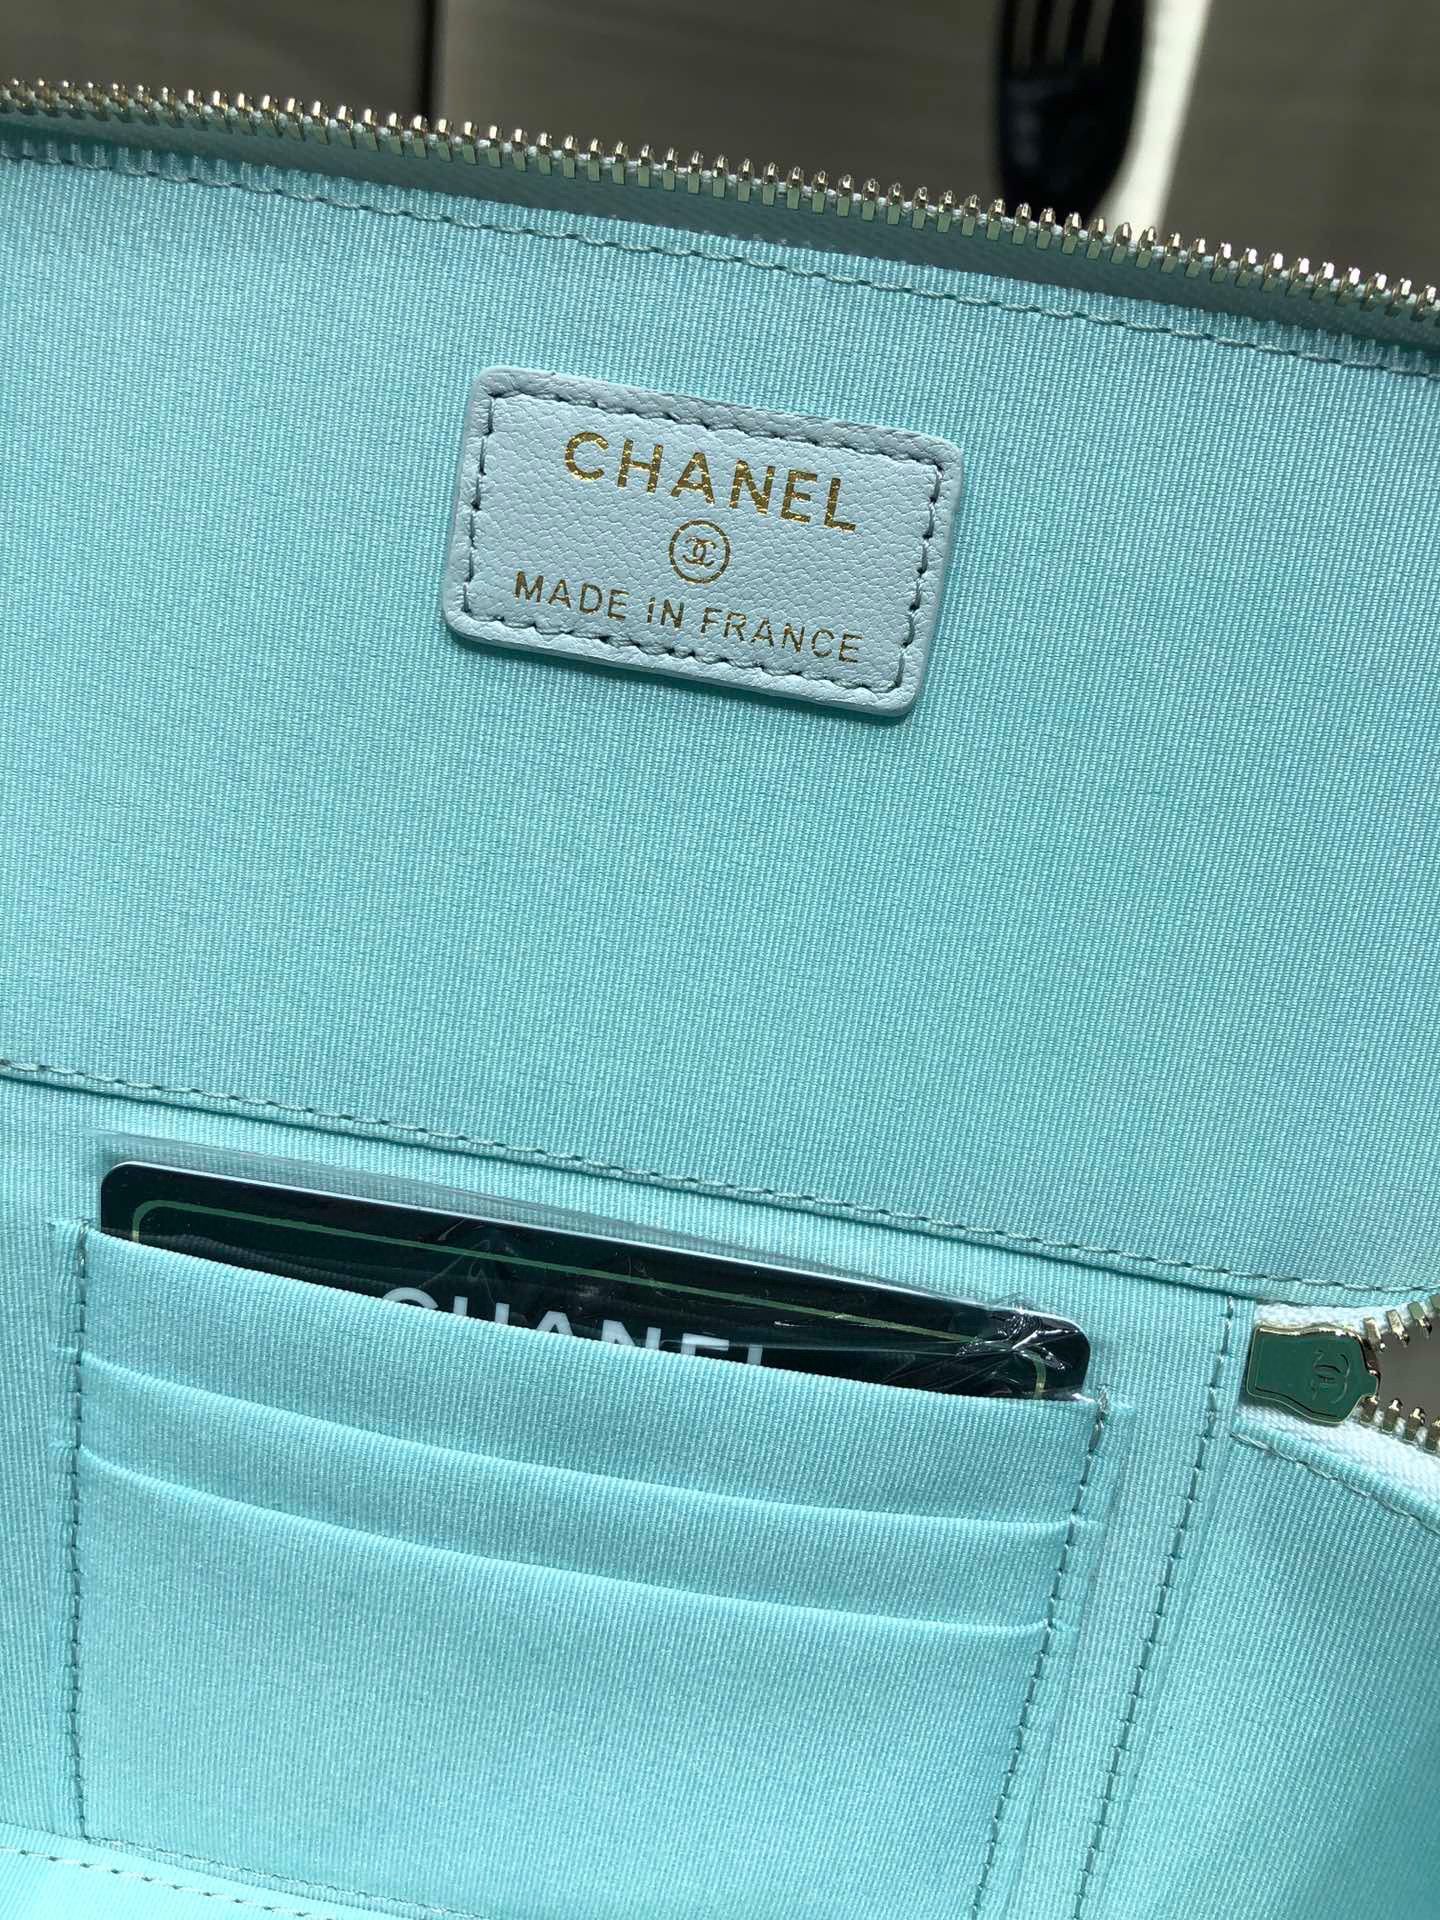 Chanel Original Small classic chain box handbag AP2199 Light Blue